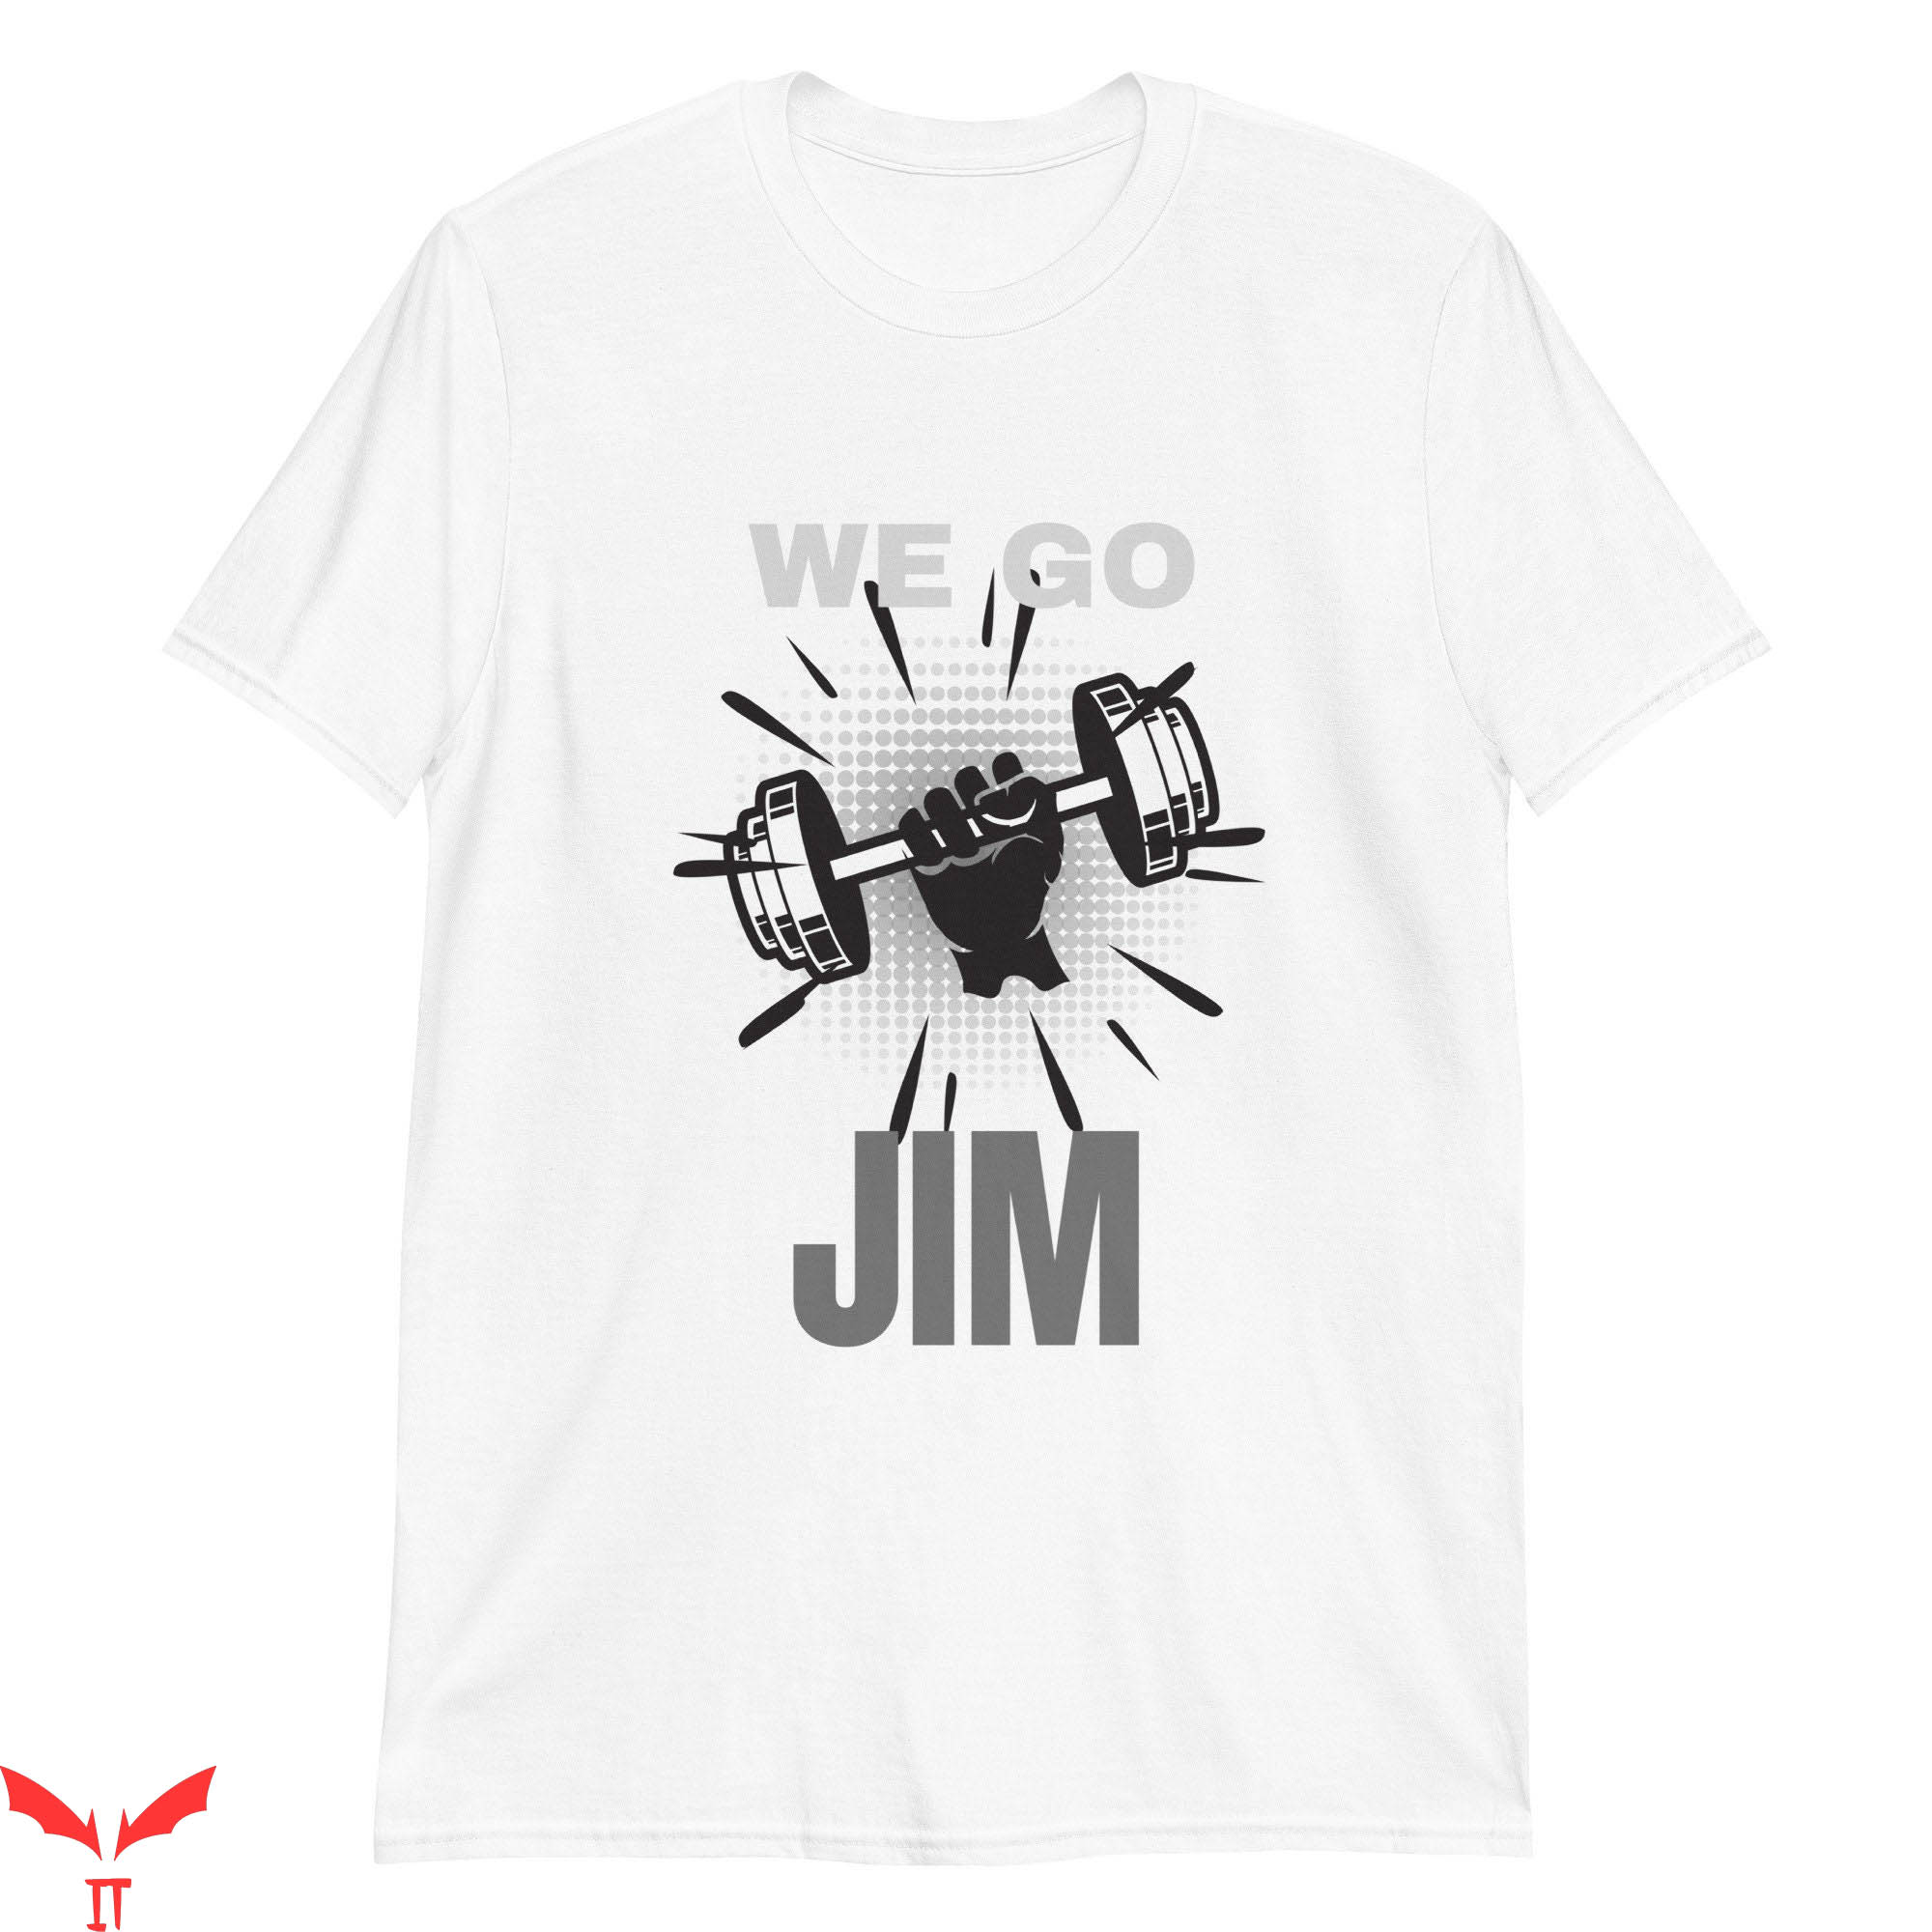 We Go Jim T-Shirt Cool Graphic Trendy Style Tee Shirt